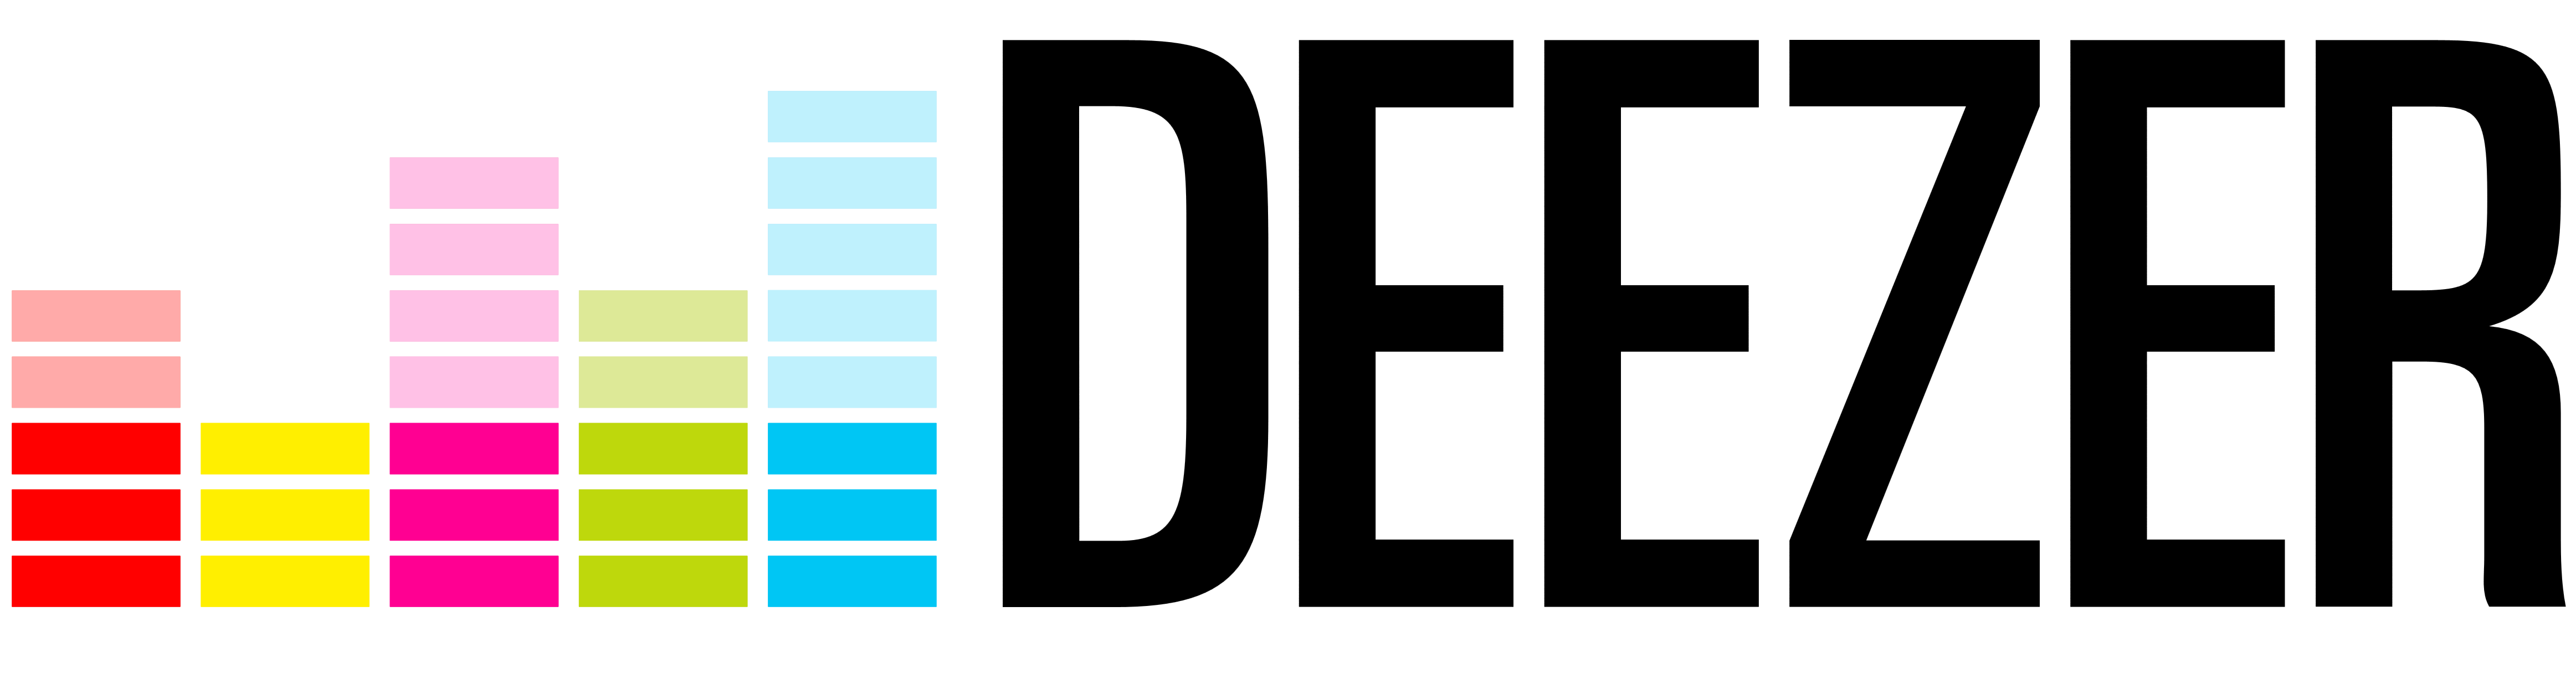 Deezer Logo - Deezer – Logos Download